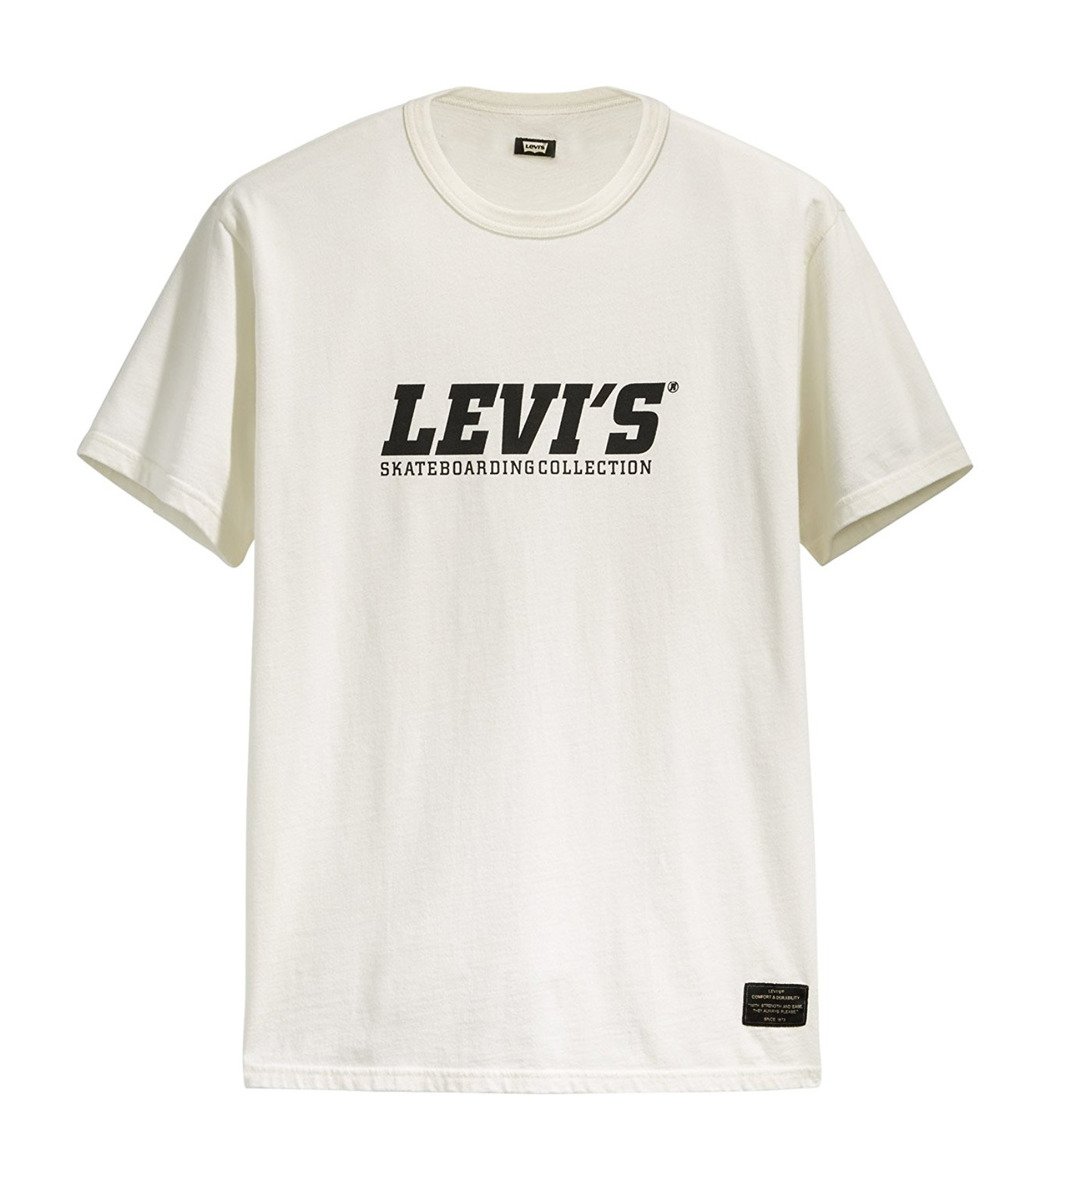 levis skate t shirt